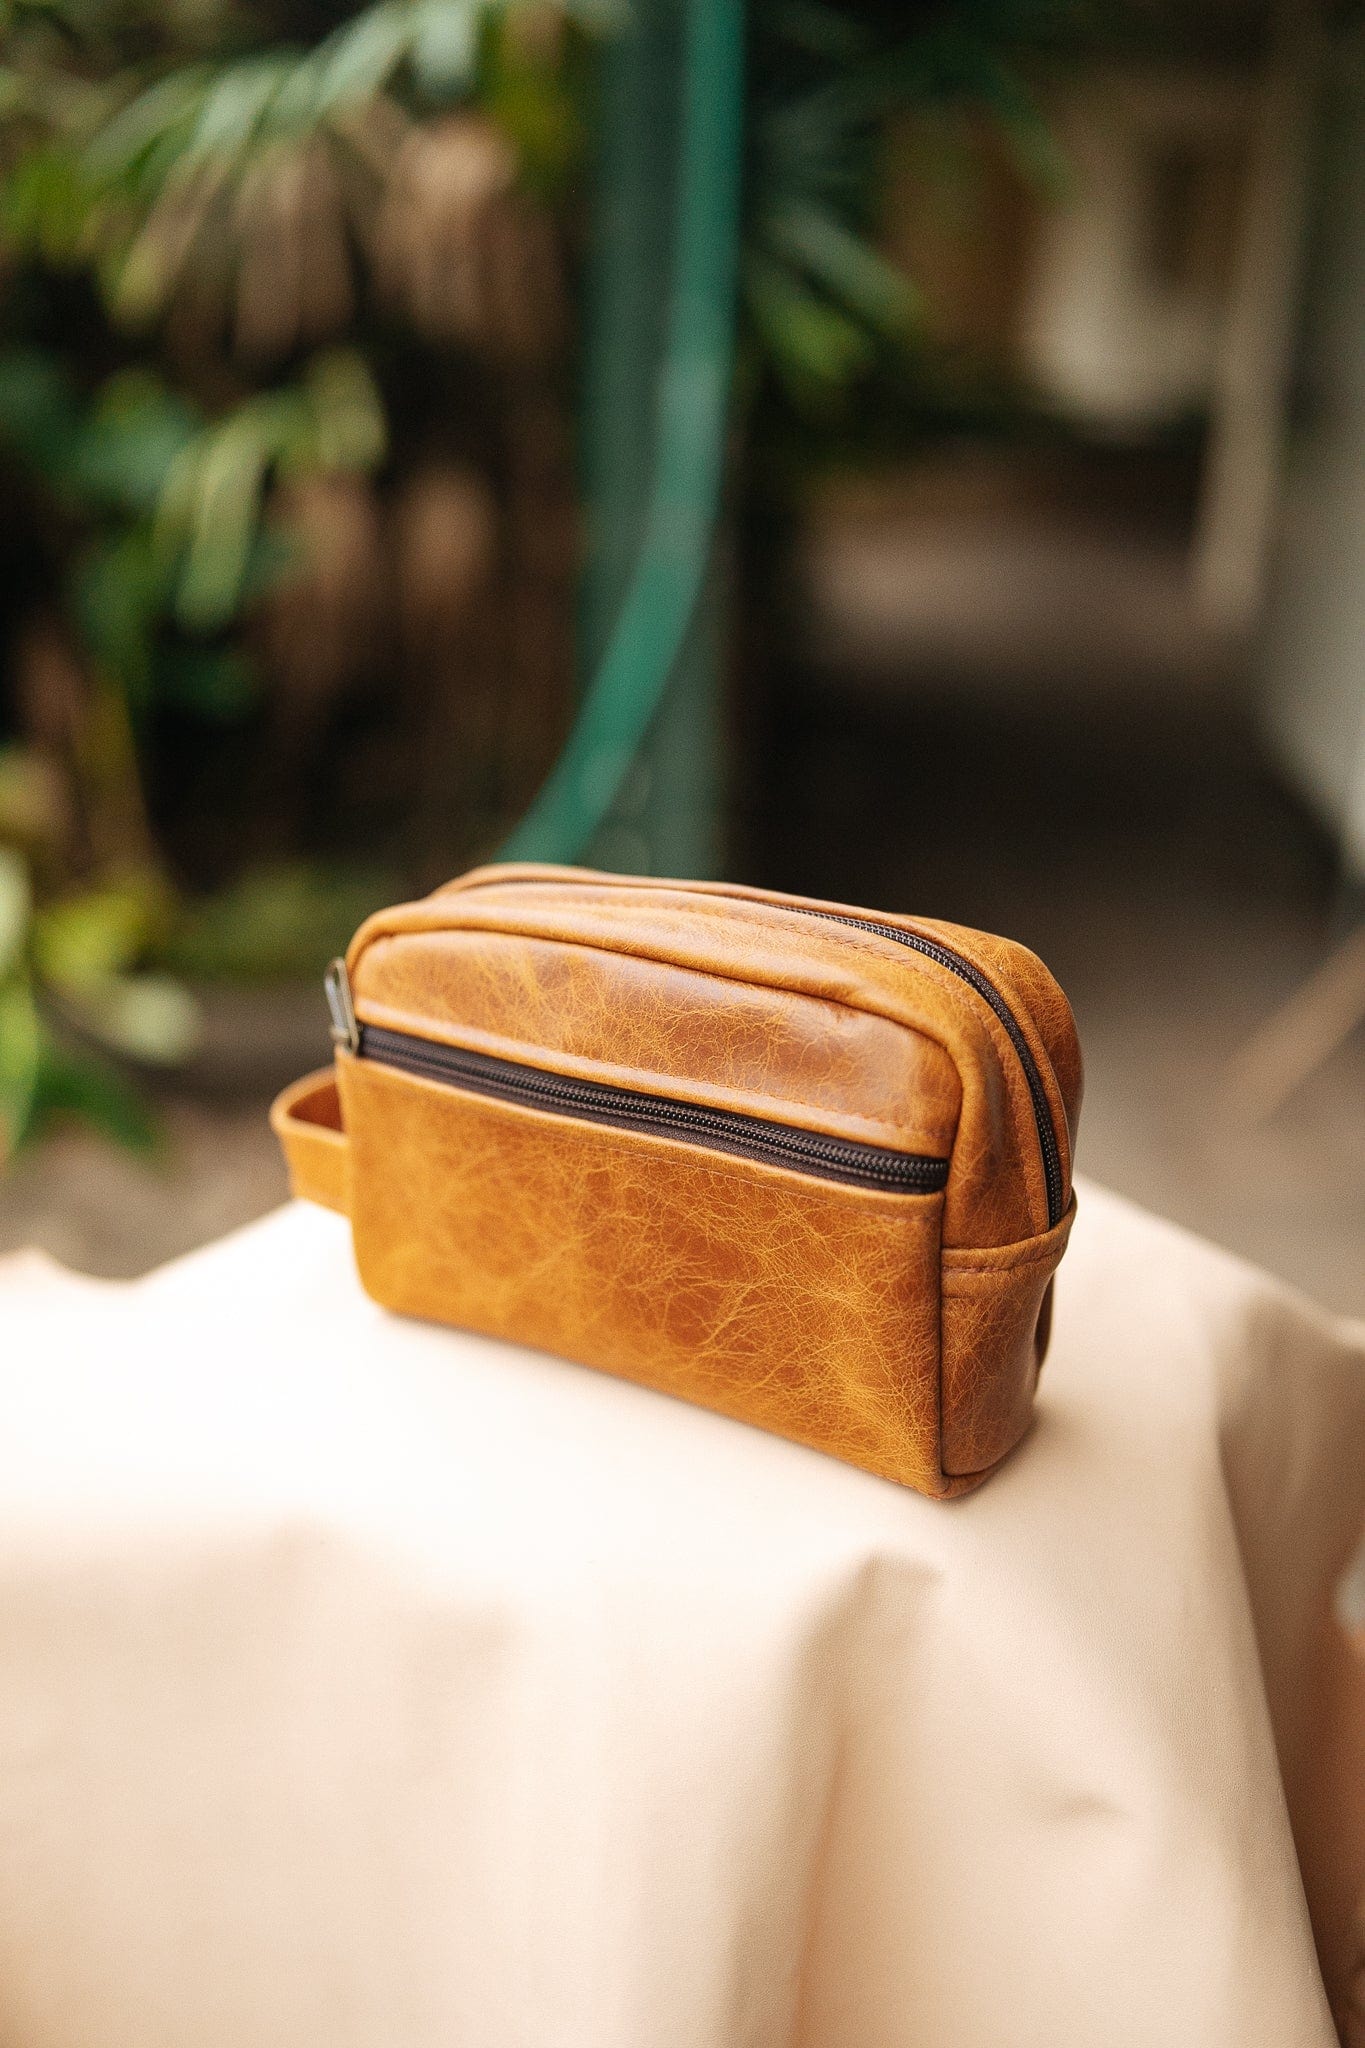 The Real McCaul Apparel & Accessories Small Toiletry Bathroom Bag - Cowhide Australian Made Australian Owned Leather Australian Made Toiletry Dopp Kit Shaving Bathroom Bag - Cowhide - Men's Gifts